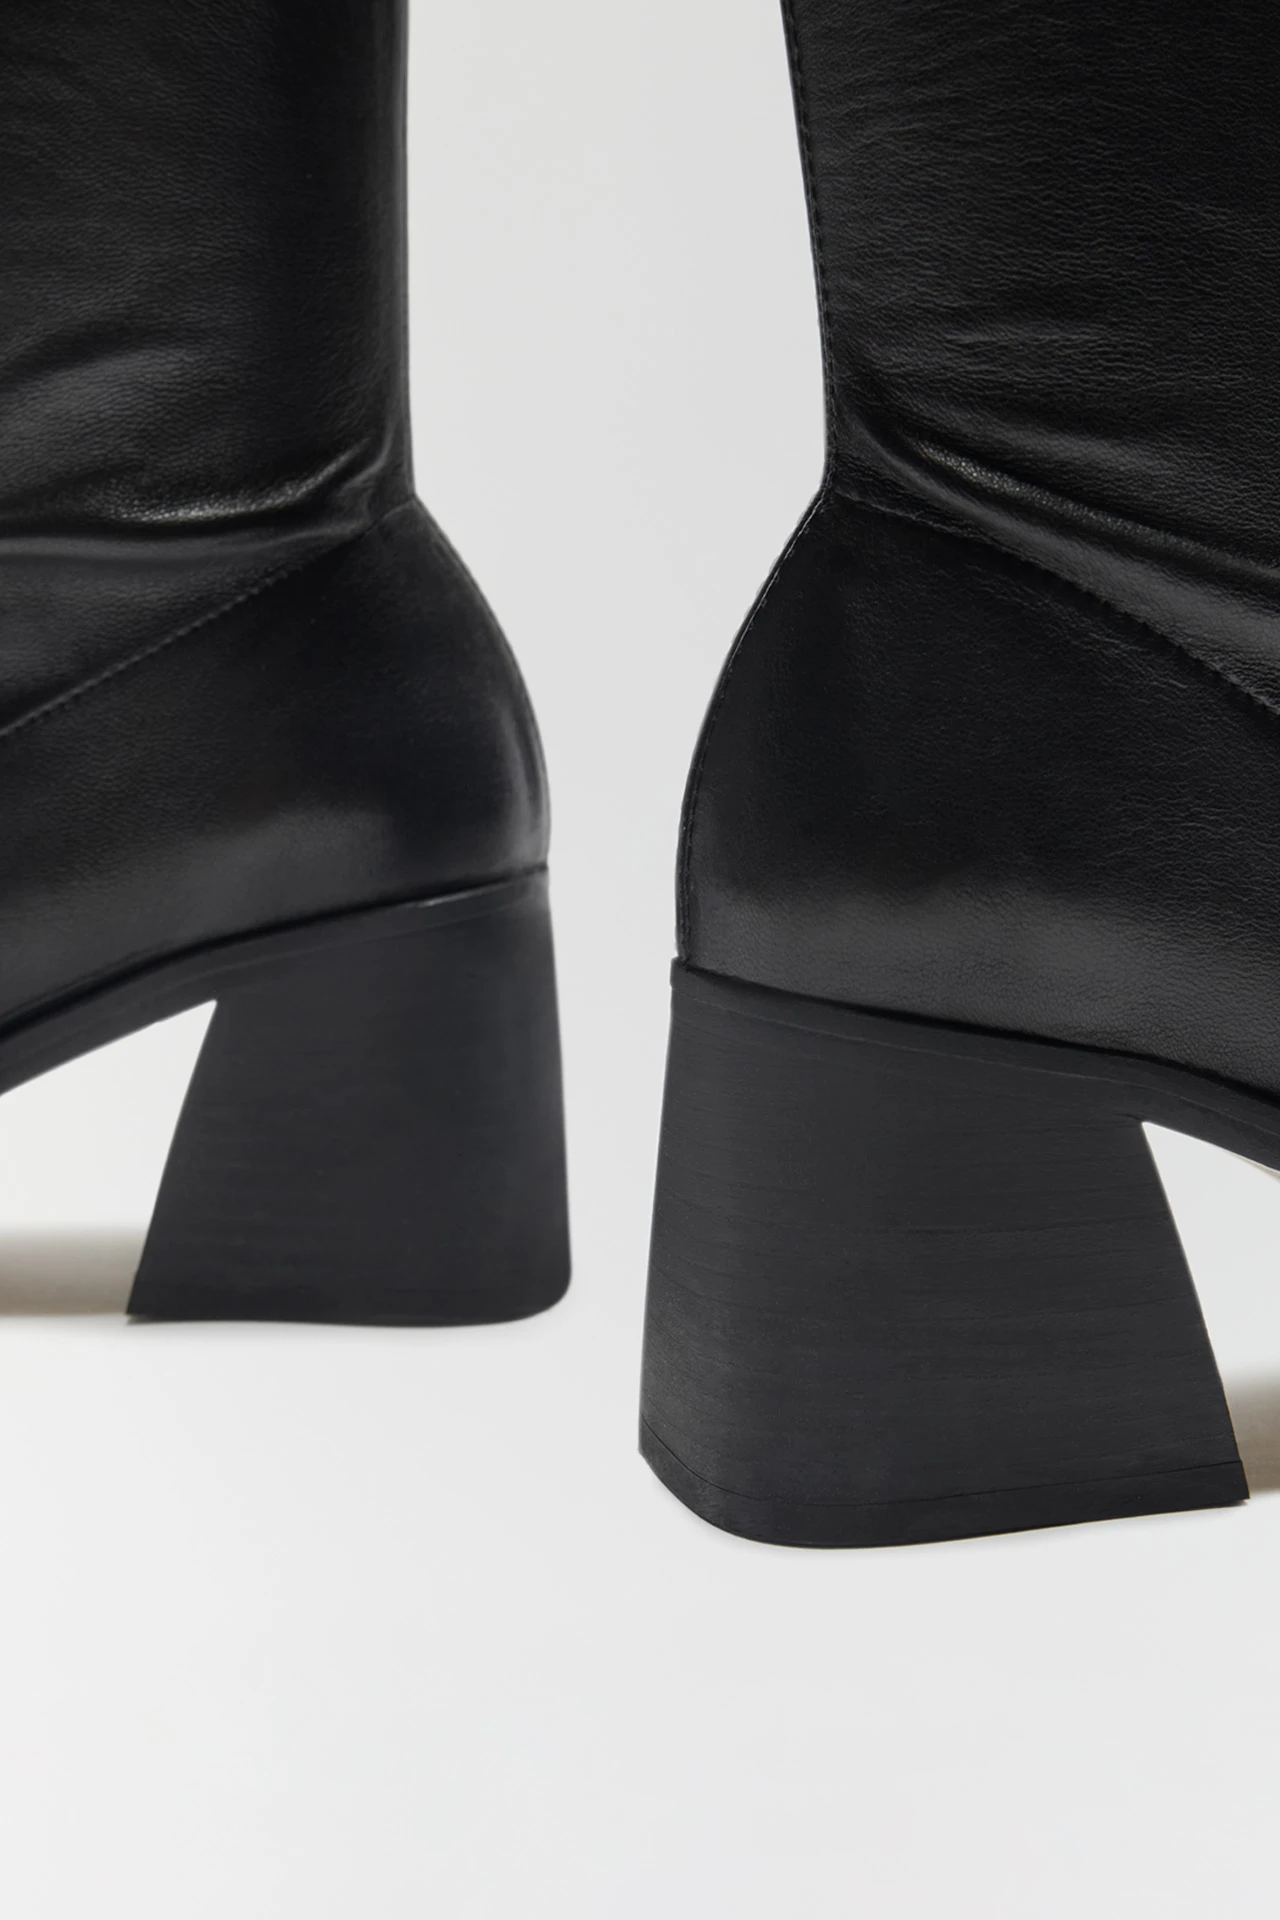 miista-hedy-black-stretch-nappa-boots-4